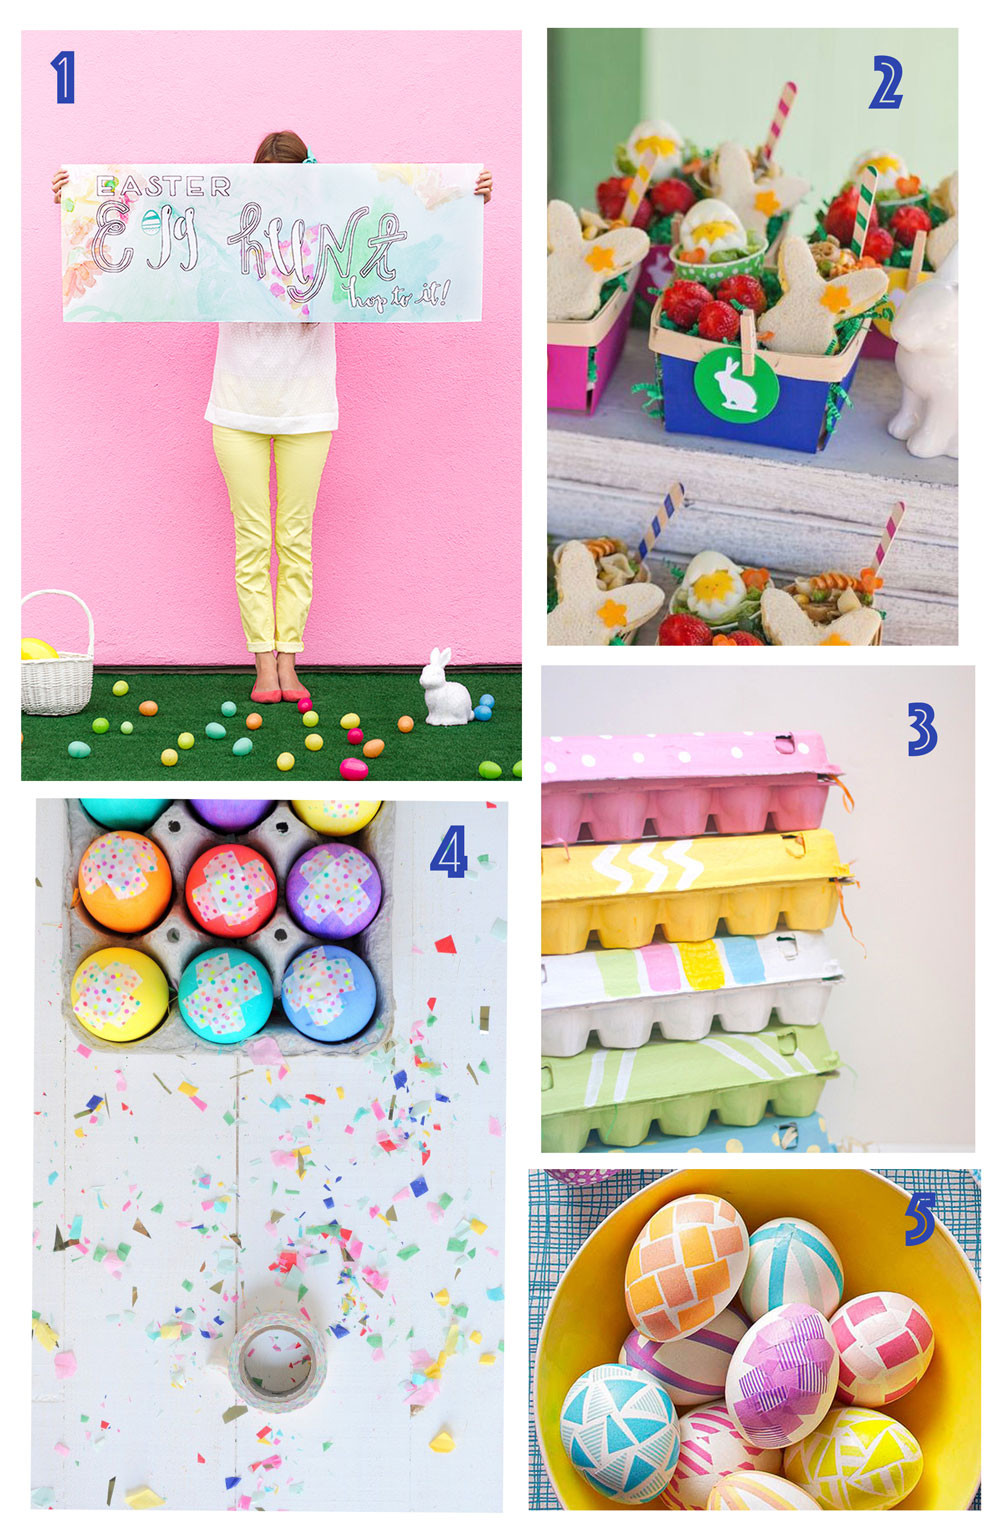 Easter Egg Hunt Ideas For Kids
 TELL EASTER EGG HUNT IDEAS Tell Love and Party